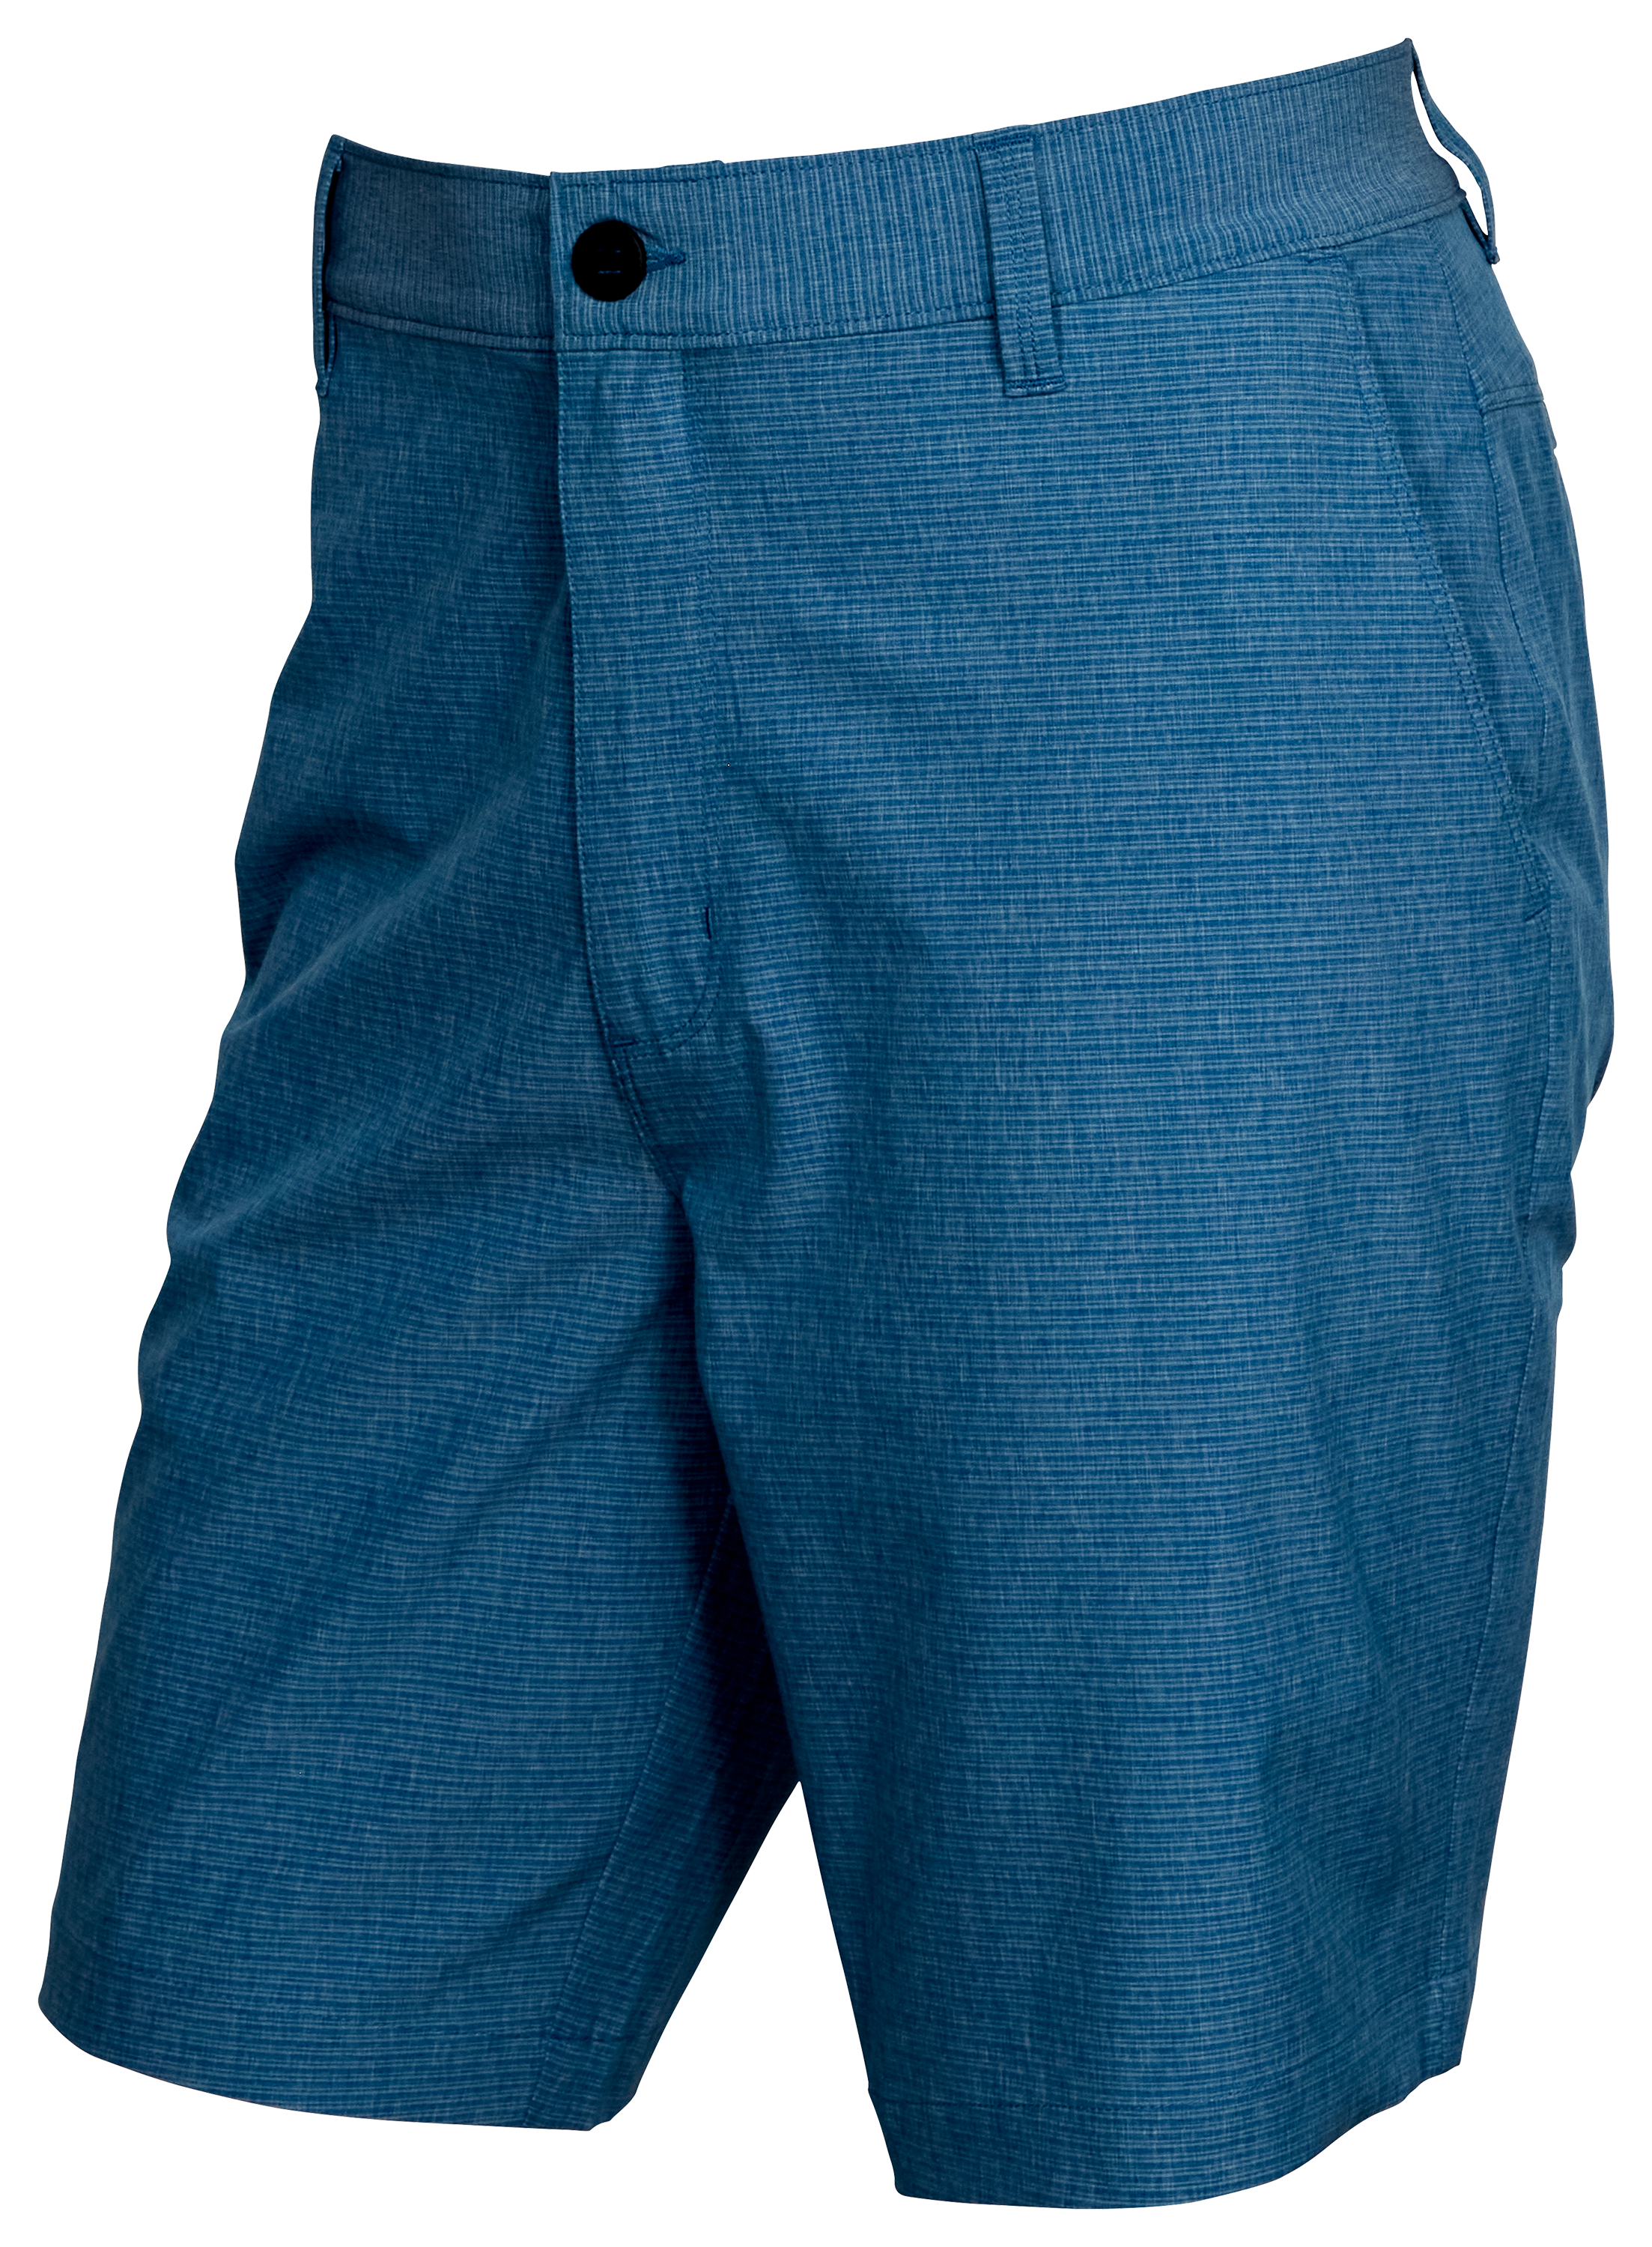 World Wide Sportsman Pescador Stretch Fishing Shorts for Men - Vallarta Blue Stripe - 36